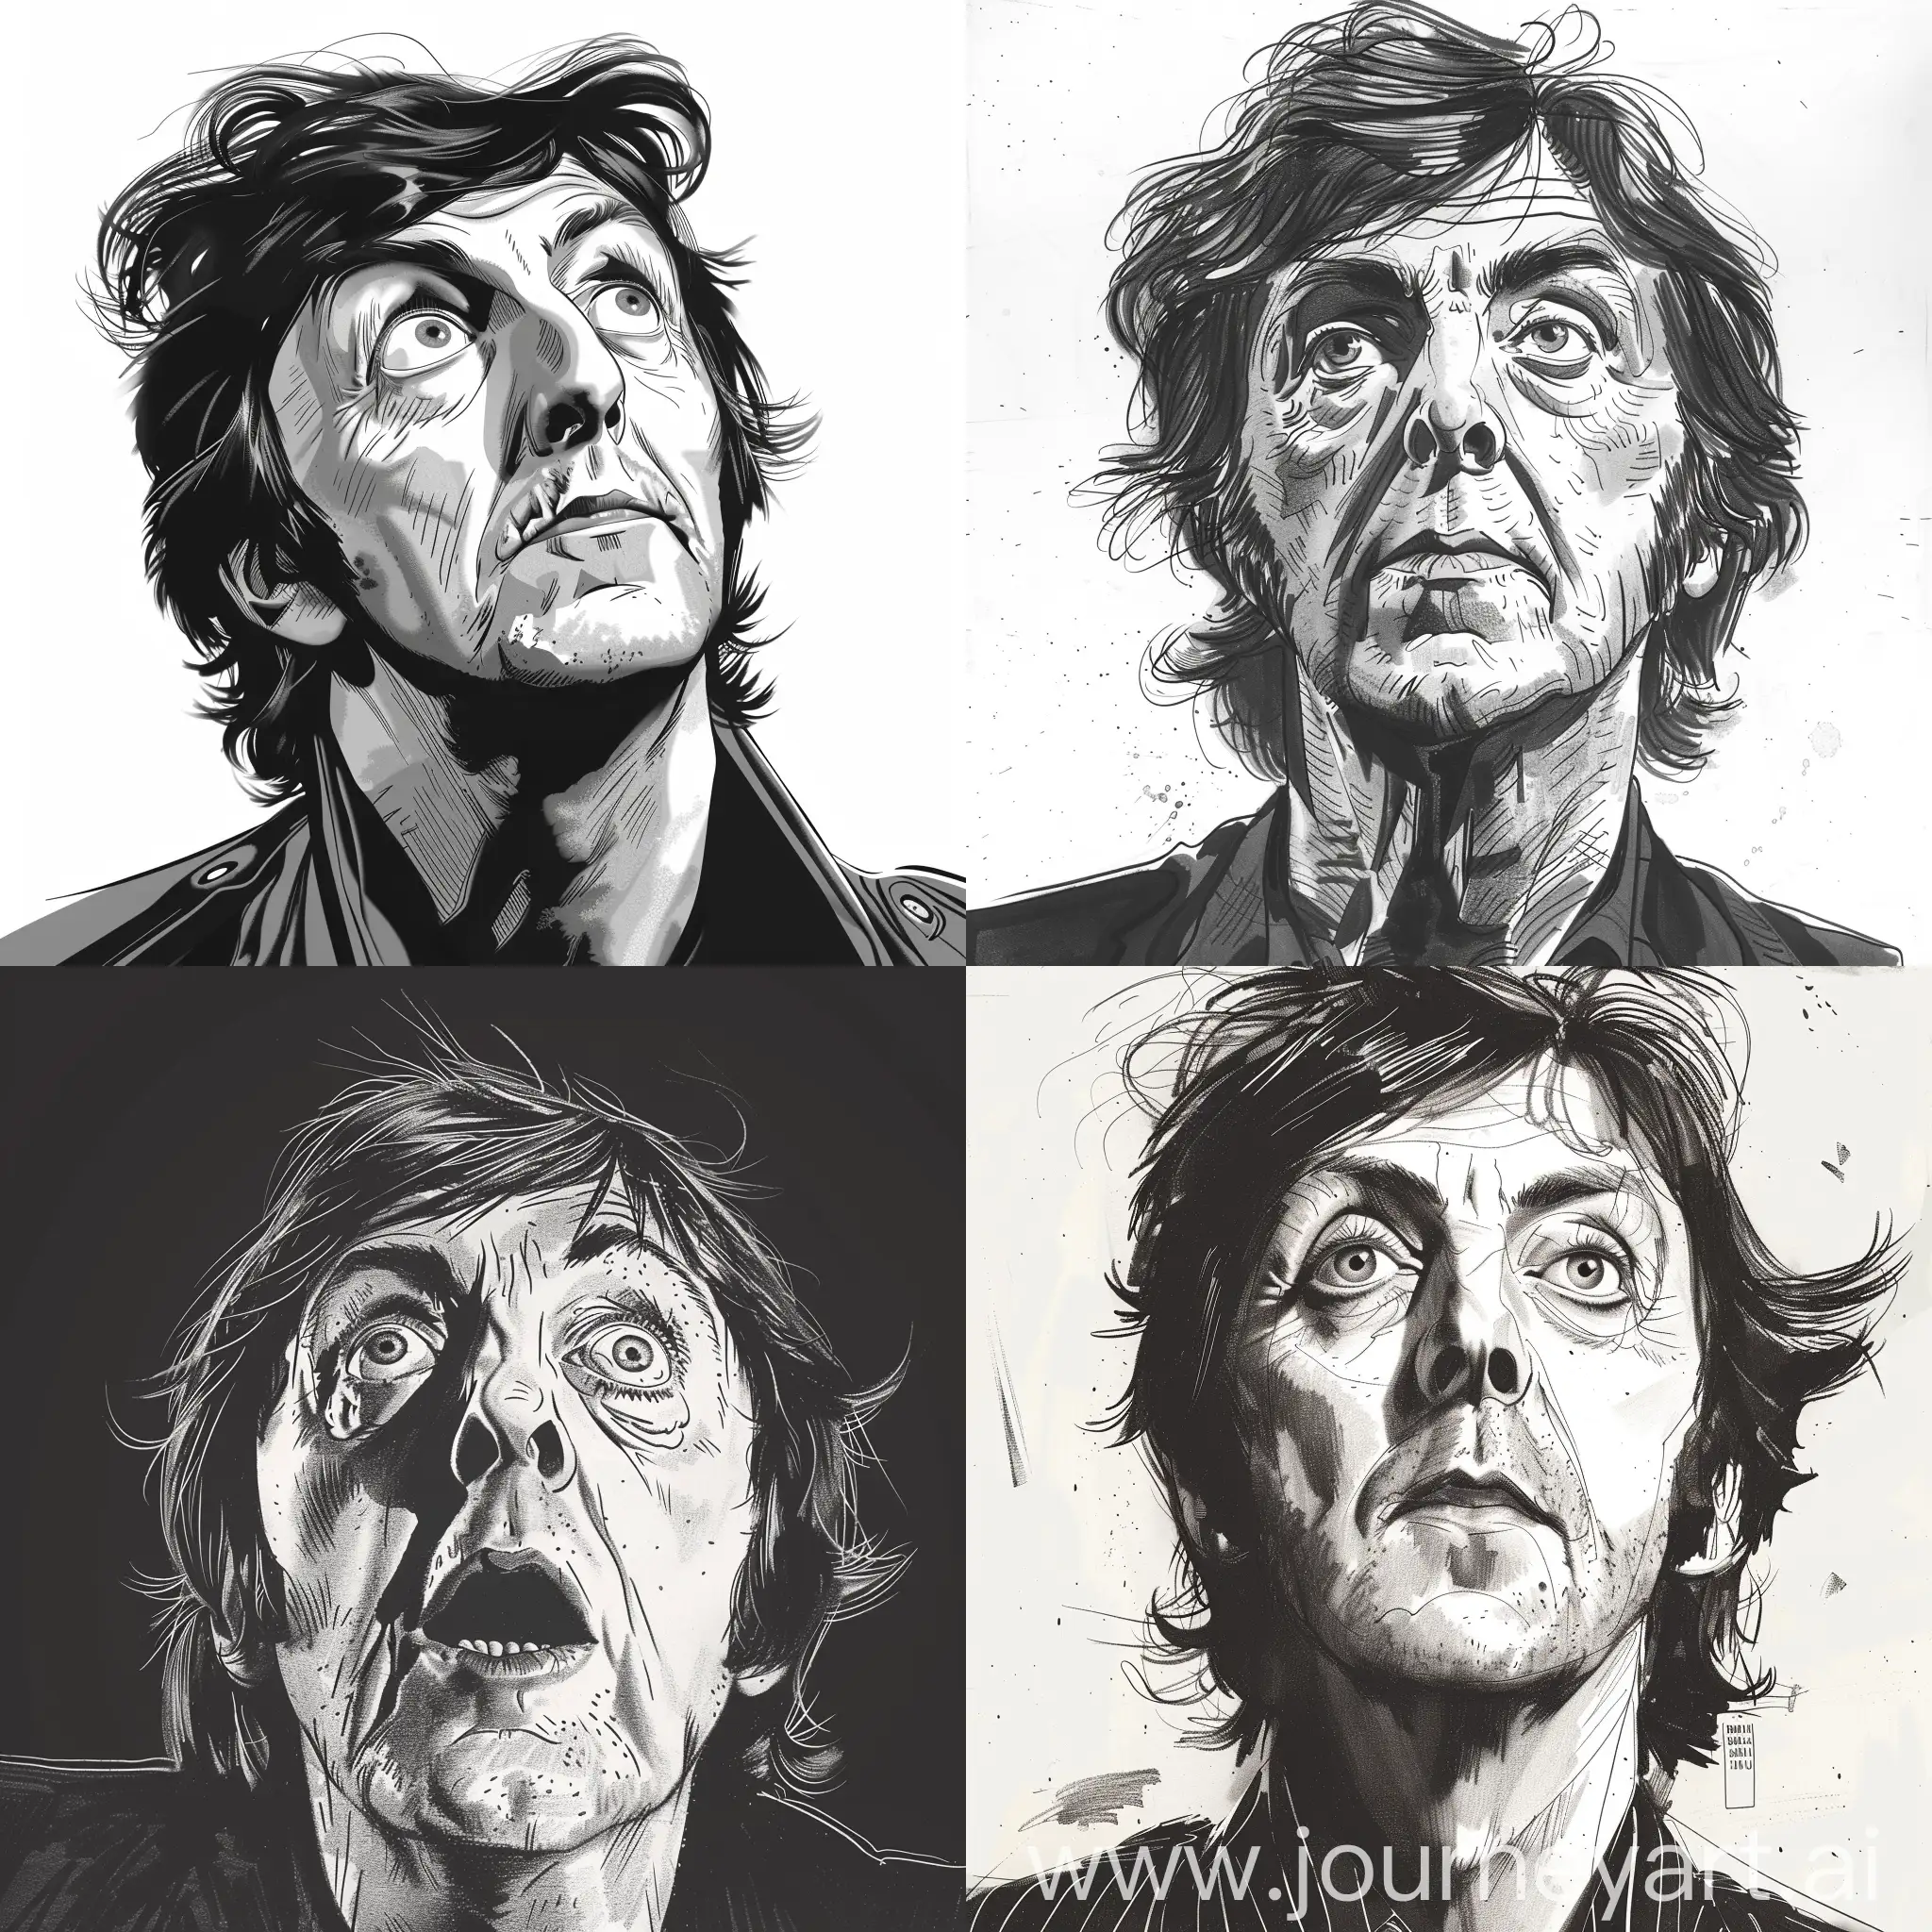 Monochrome-Comic-Sketch-of-Paul-McCartney